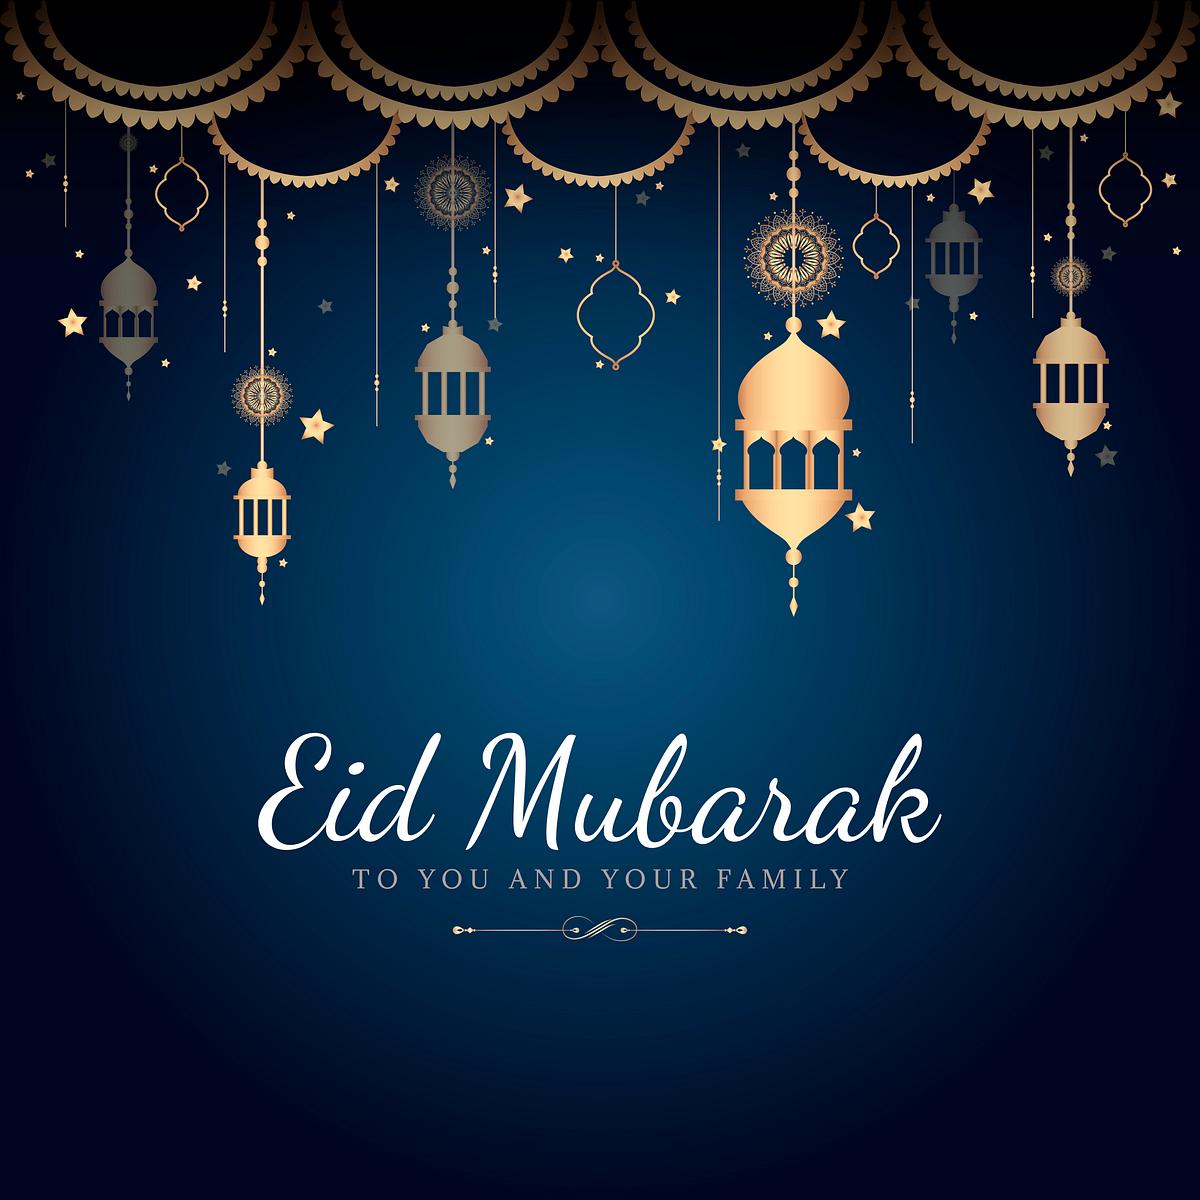 eid-mubarak-celebratory-illustration-royalty-free-stock-vector-555640